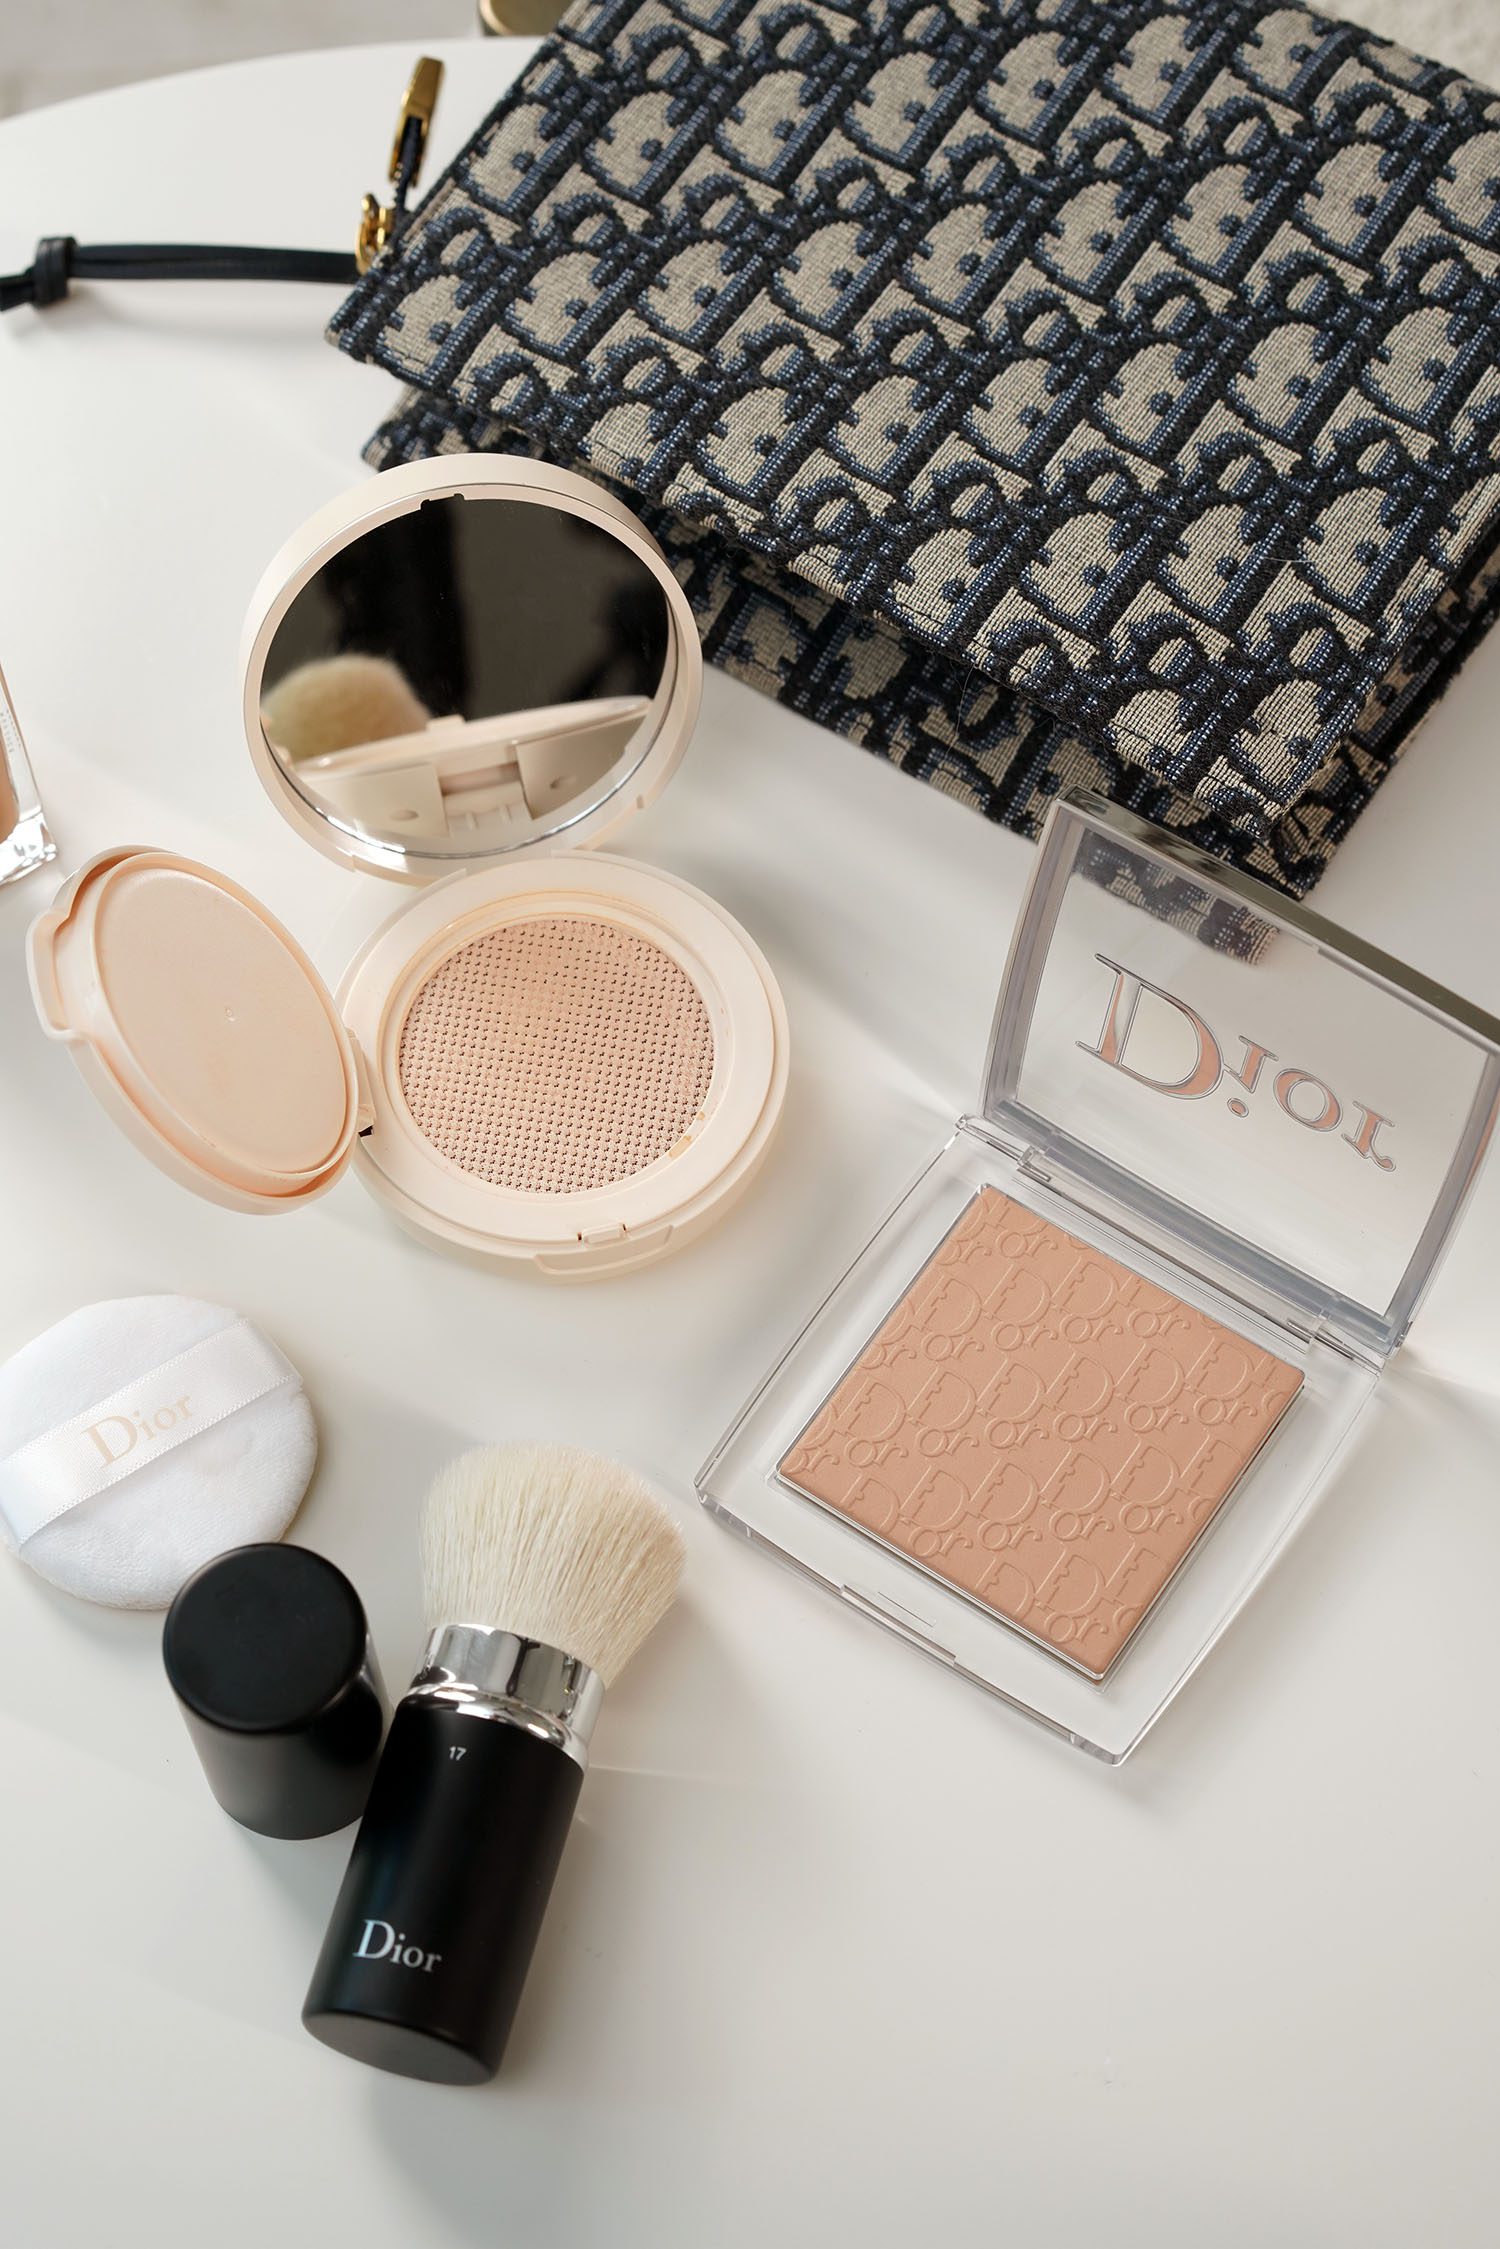 Dior Makeup Favorites - The Beauty Look Book